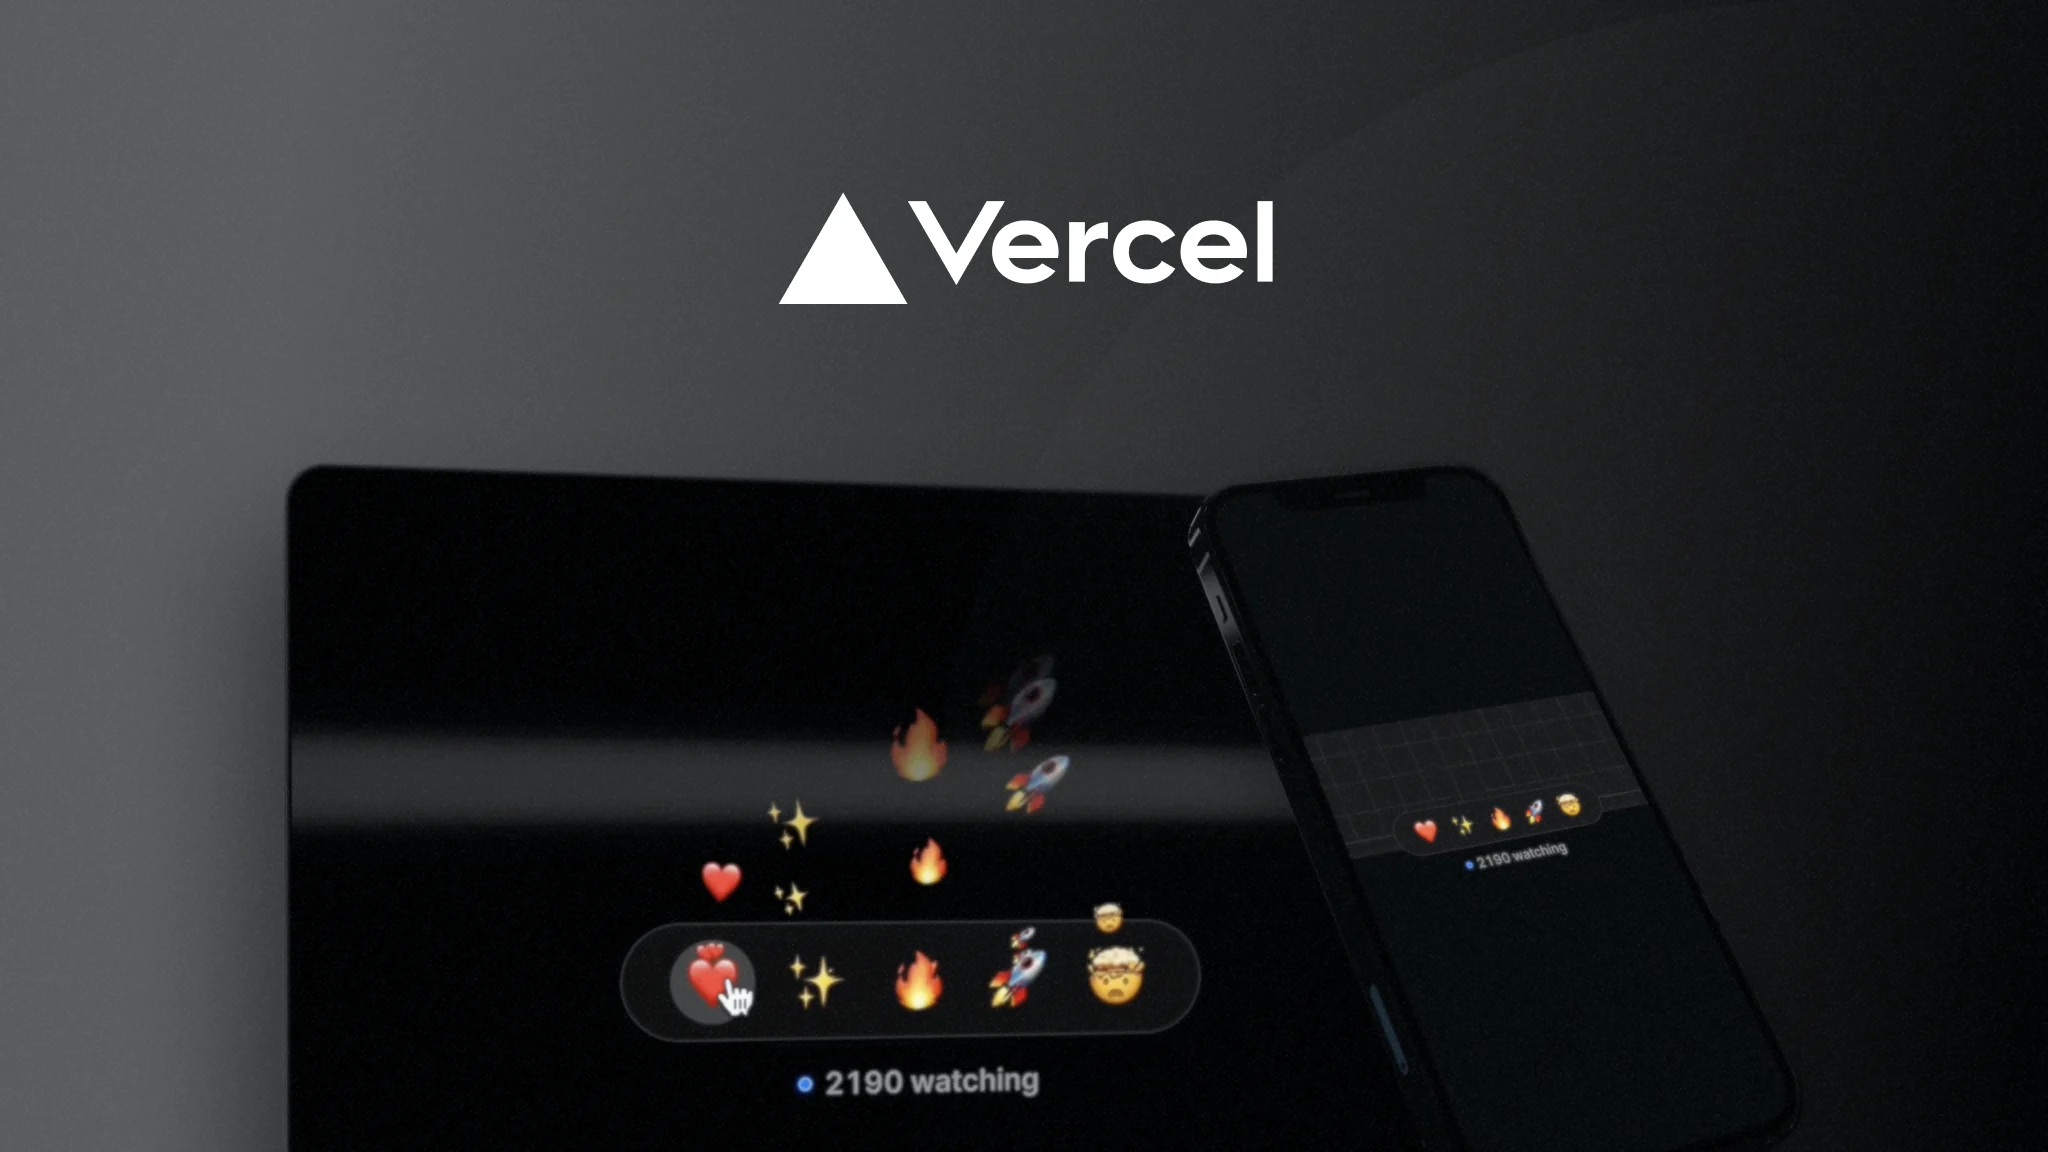 Vercel Ship’s livestream emoji reaction experience, powered by Liveblocks (source)